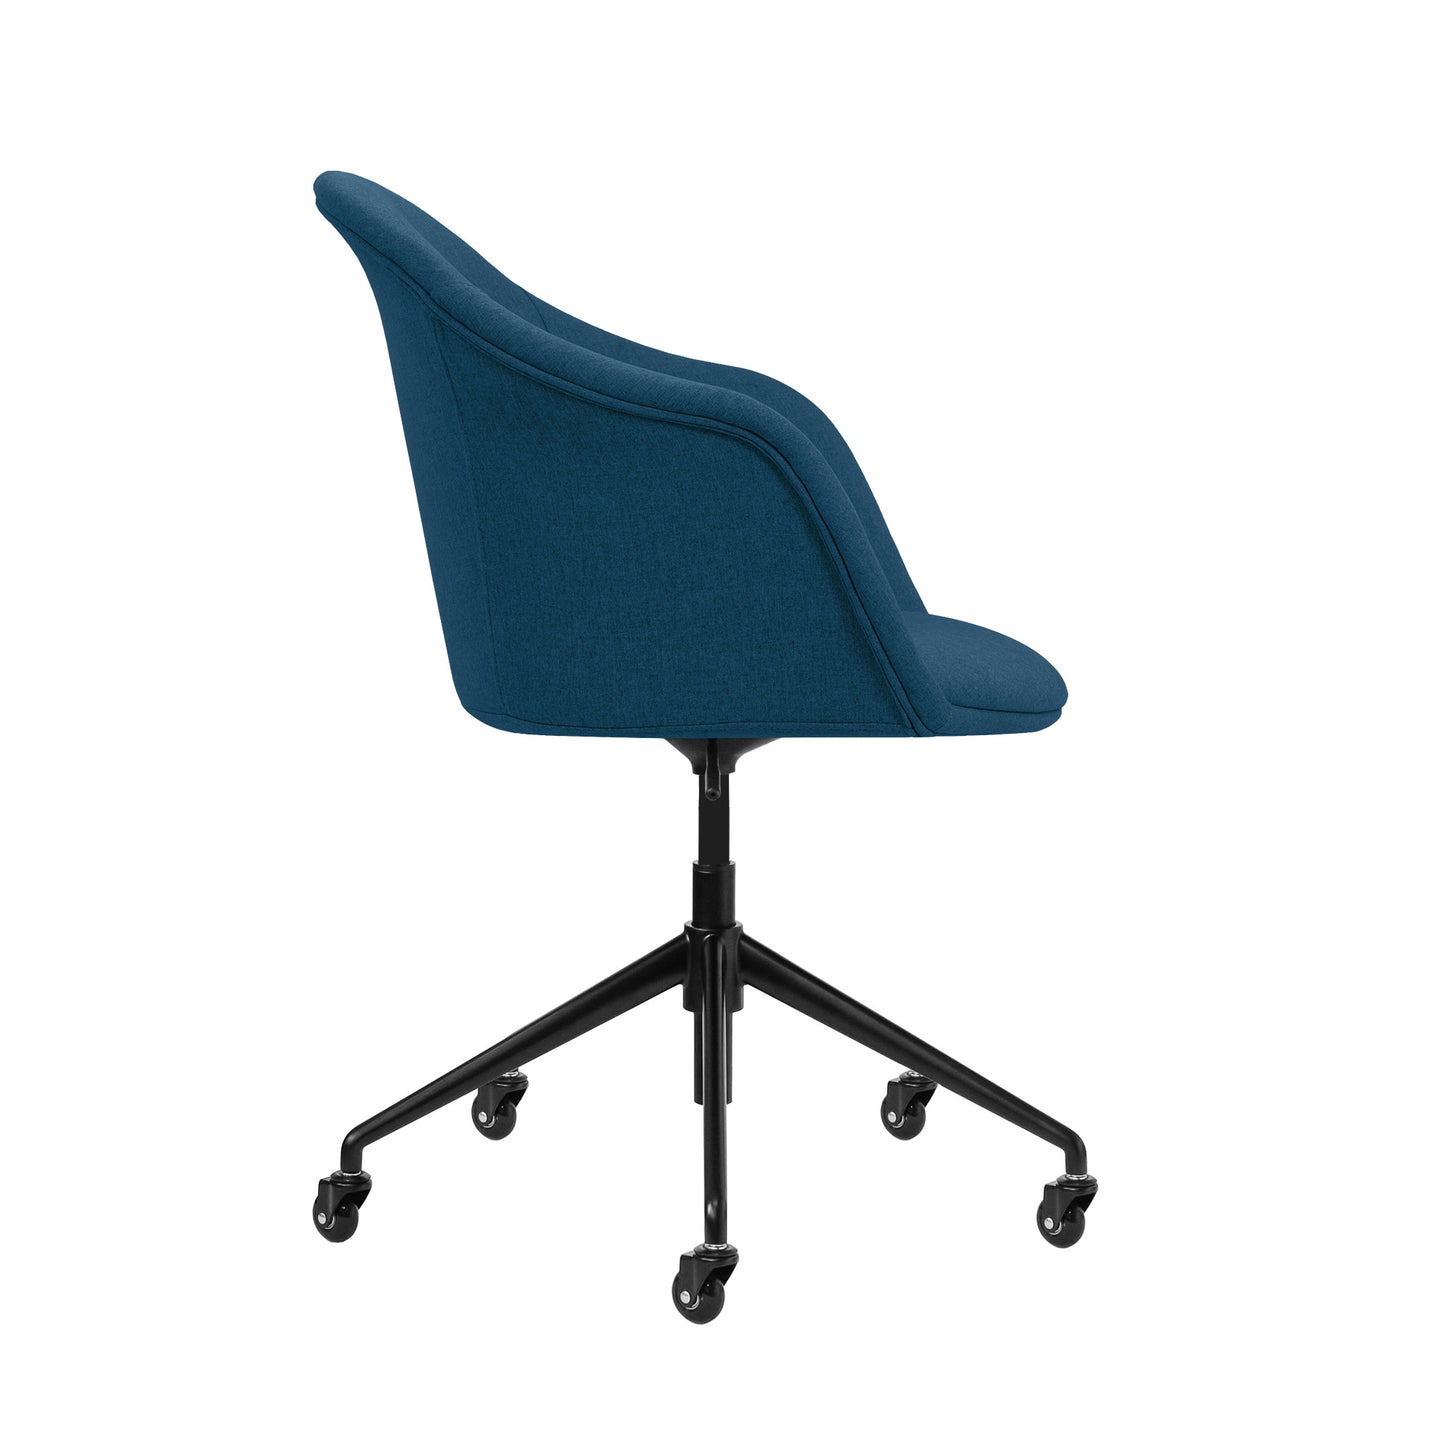 SHIPS JUNE 10TH - Astoria II Office Chair (Dark Blue)